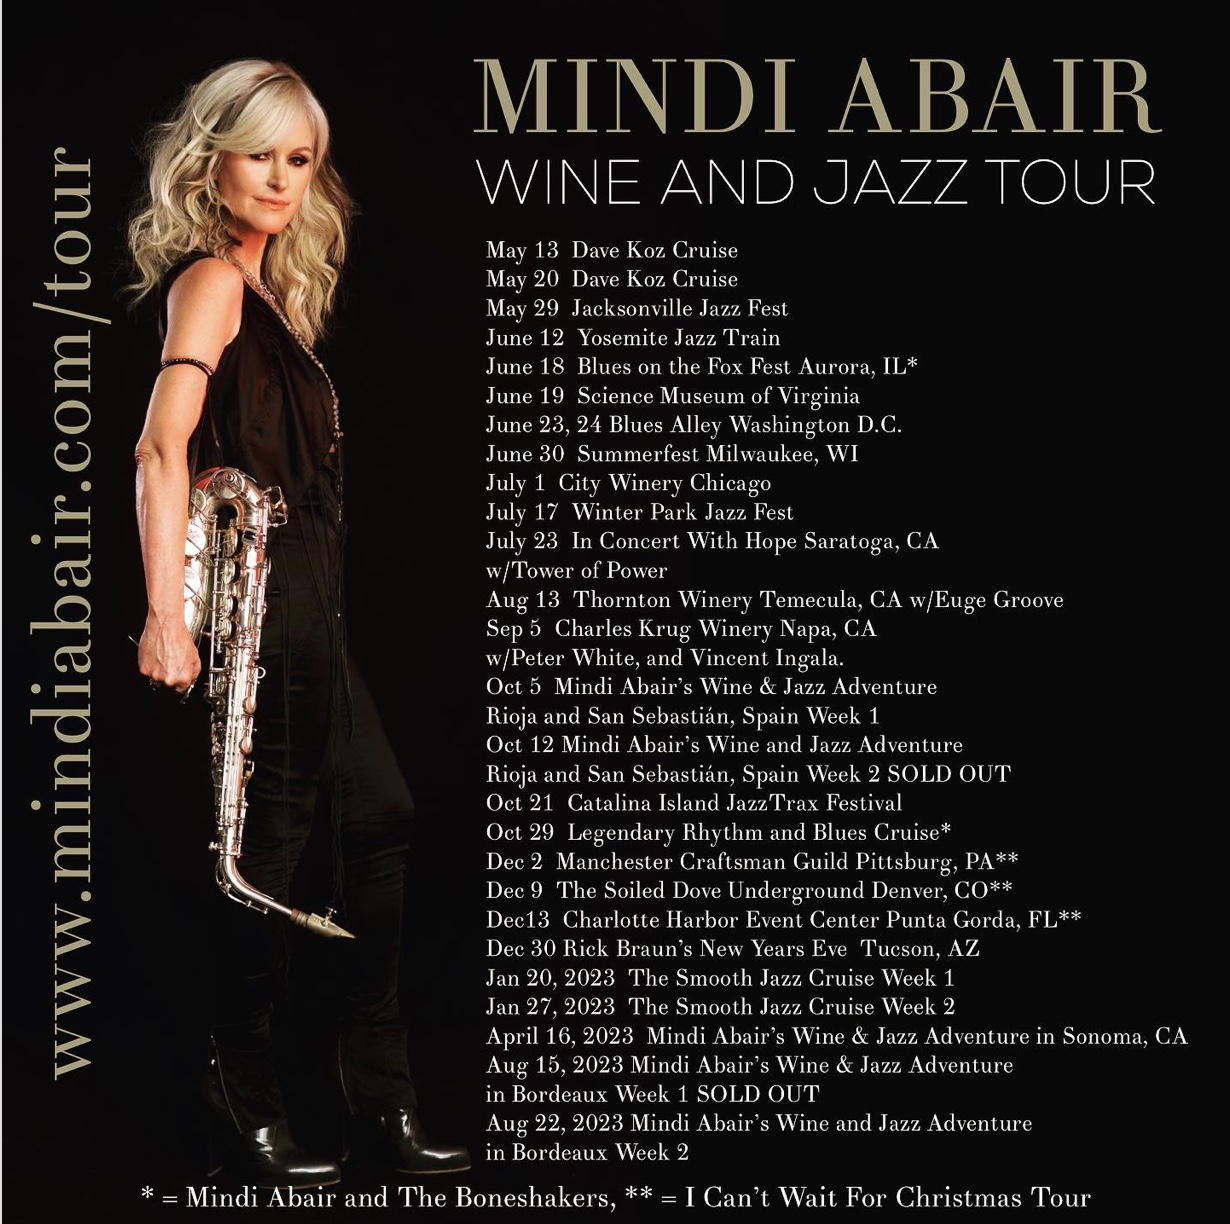 Mindi Abair Wine and Jazz Tour Dates